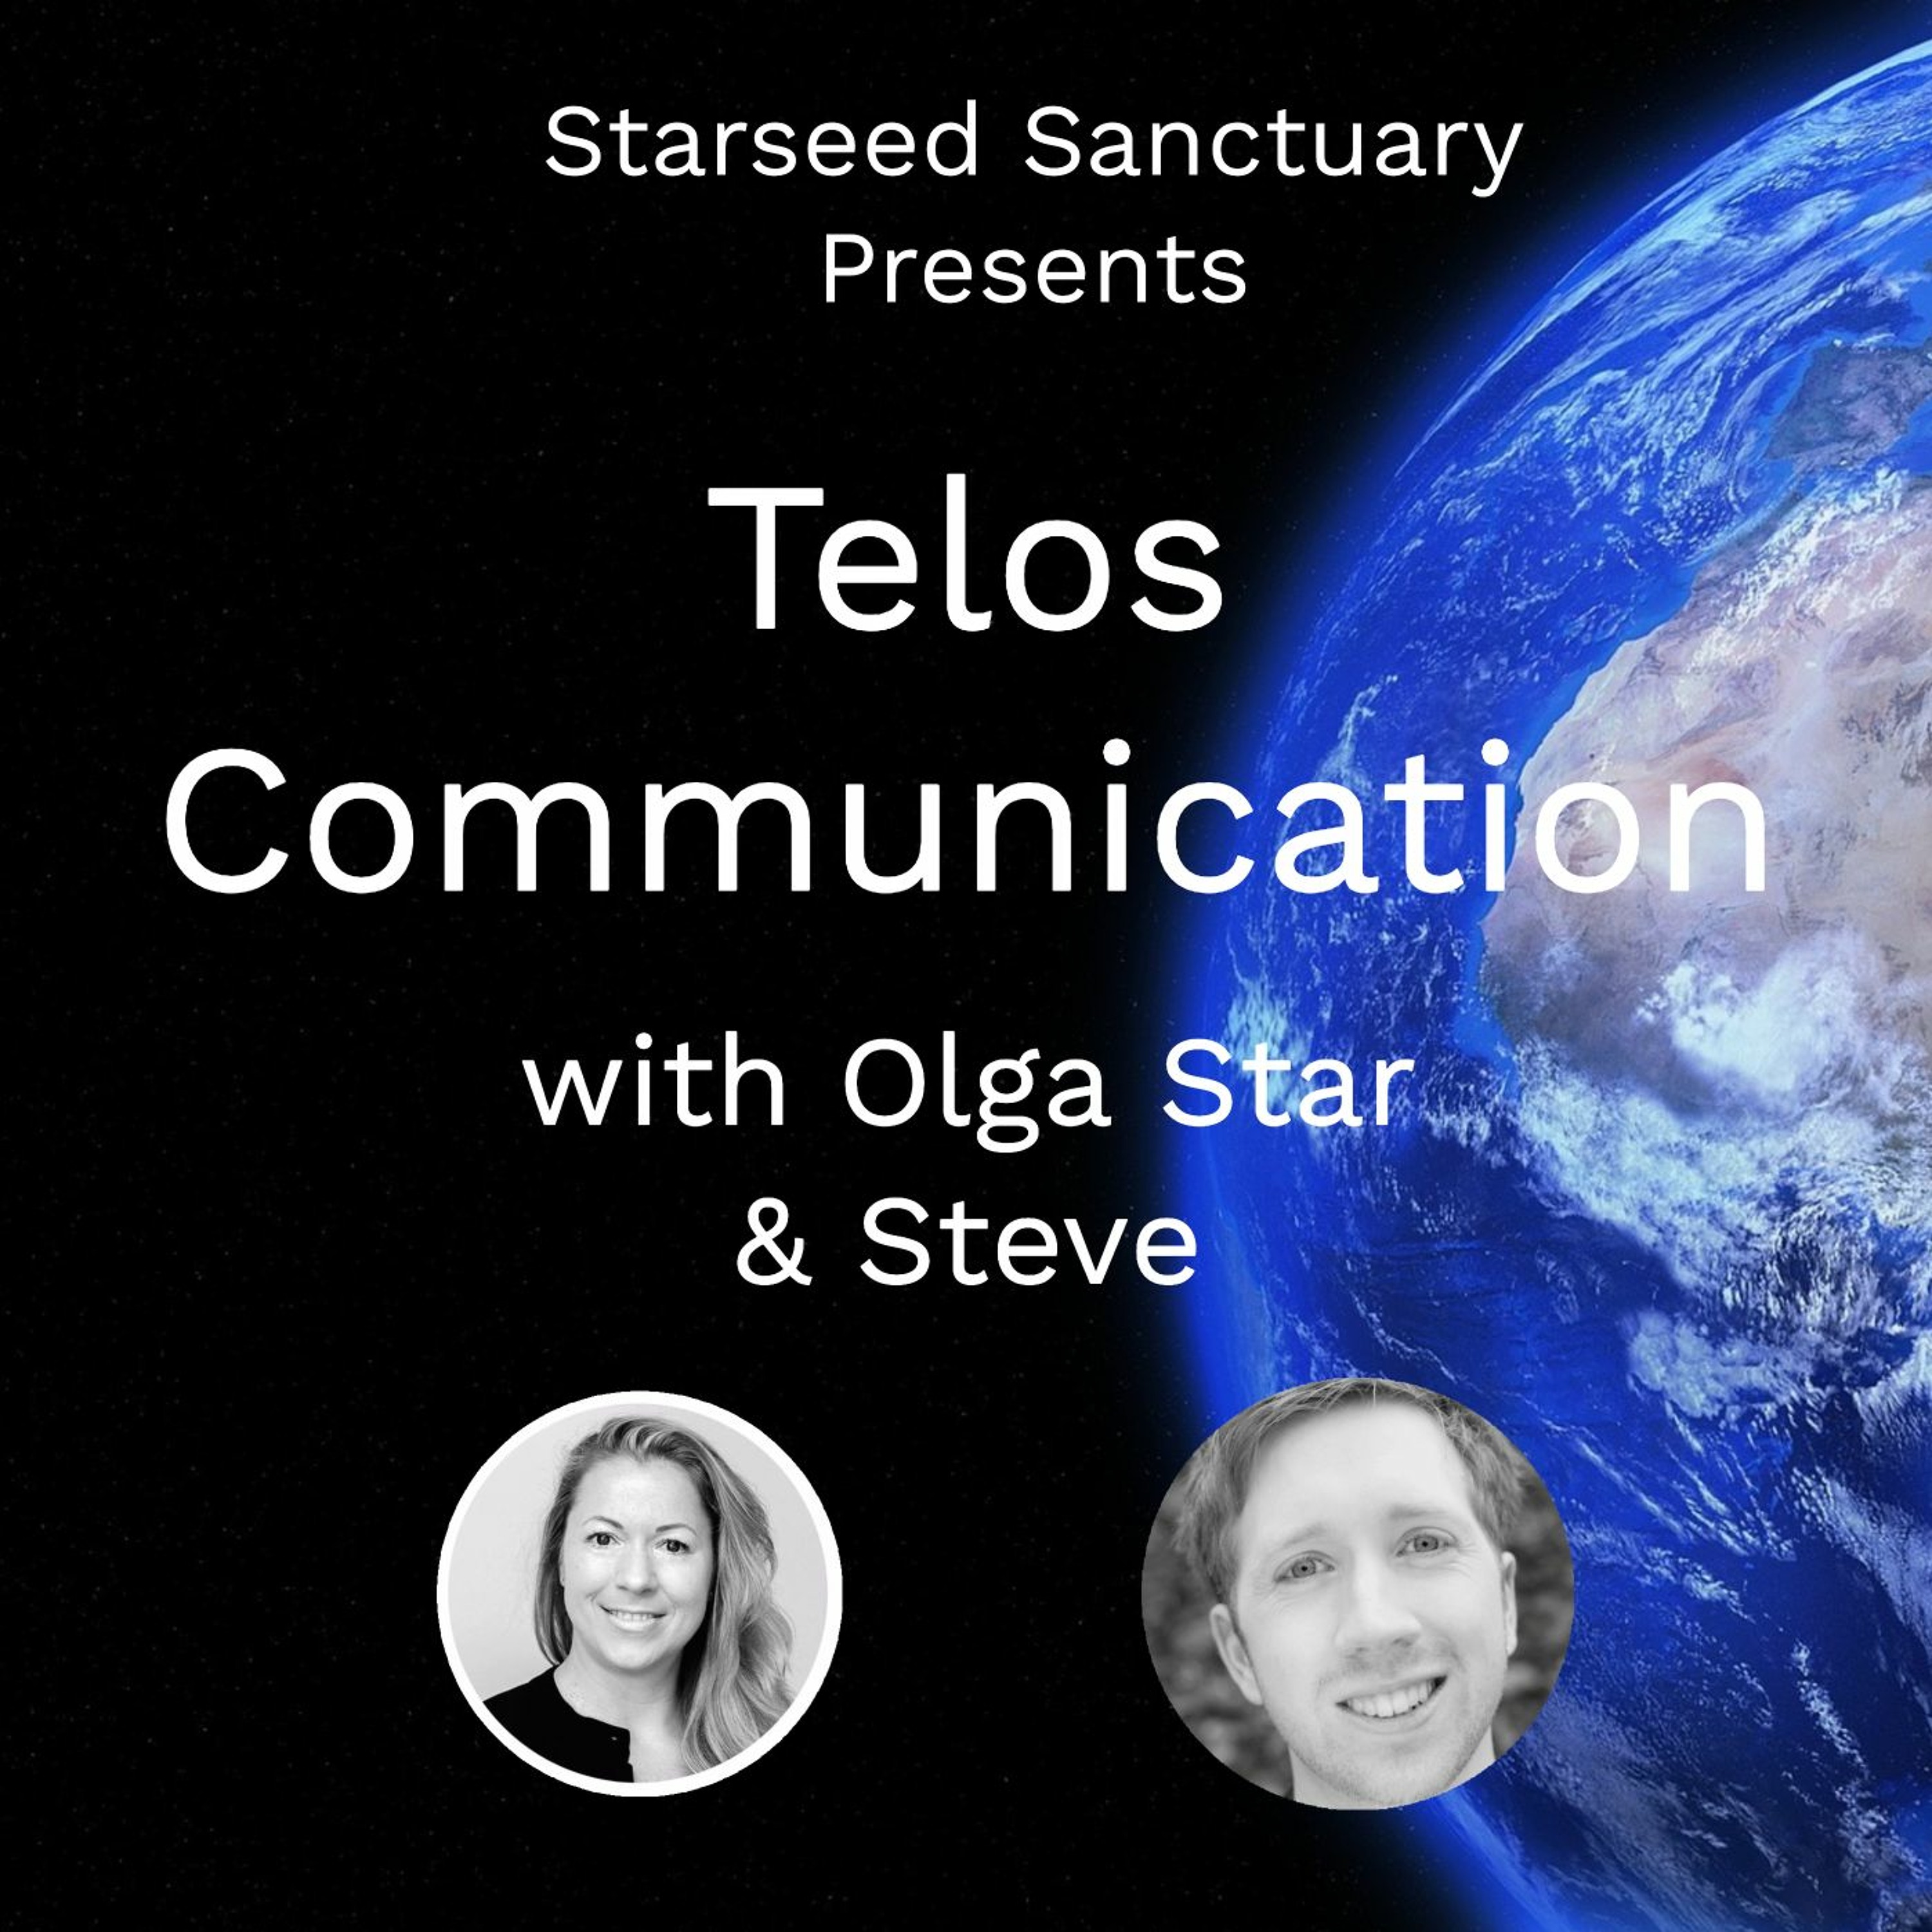 Telos Communications